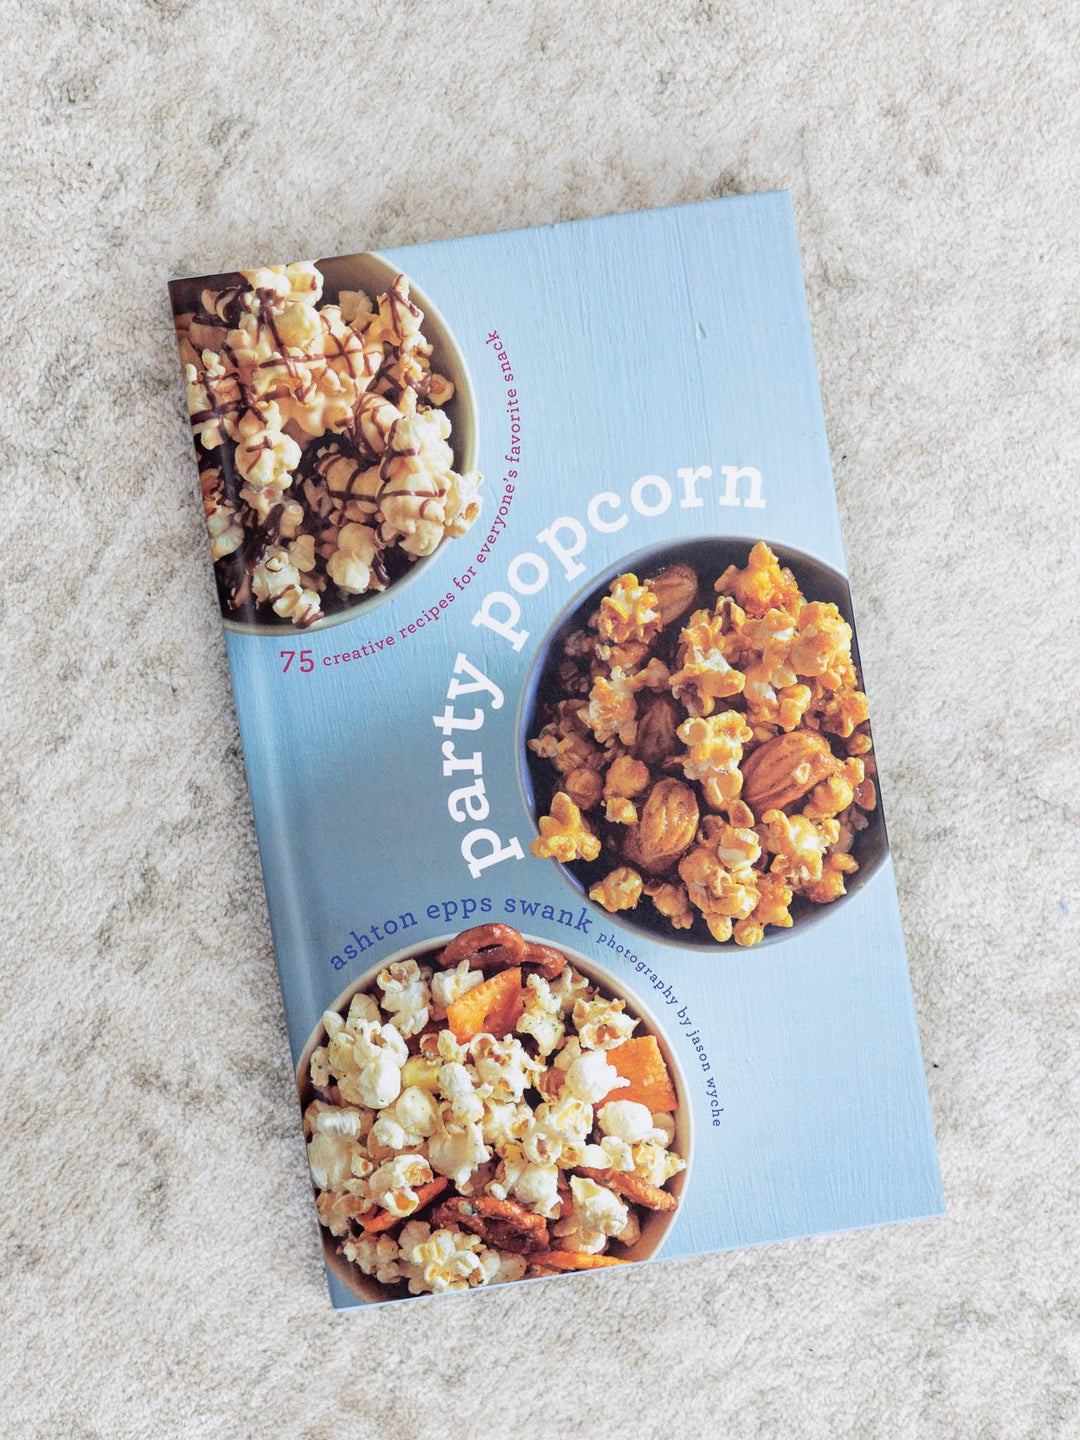 popcorn recipe book